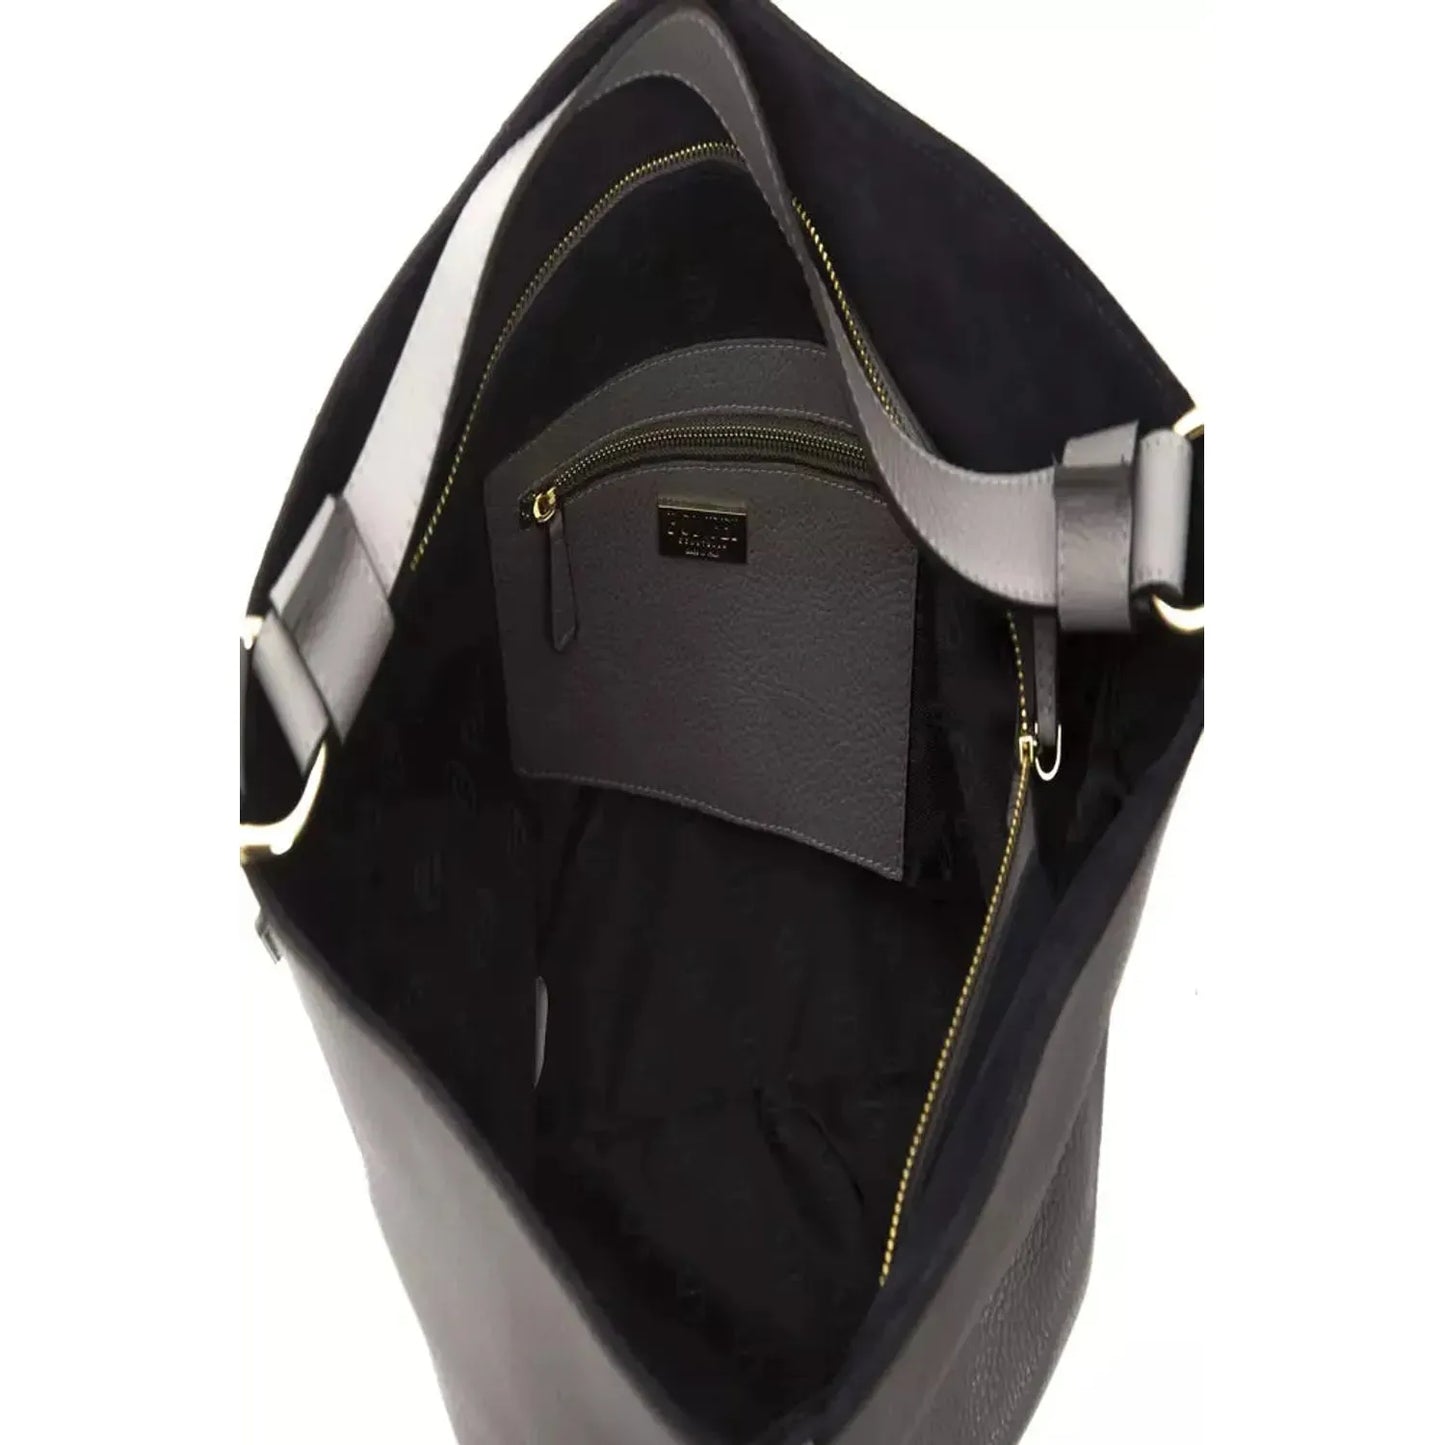 Pompei Donatella Chic Gray Leather Shoulder Bag - Adjustable Strap WOMAN SHOULDER BAGS gray-leather-shoulder-bag-1 stock_product_image_5805_436217802-21-947a96dd-cfc.webp